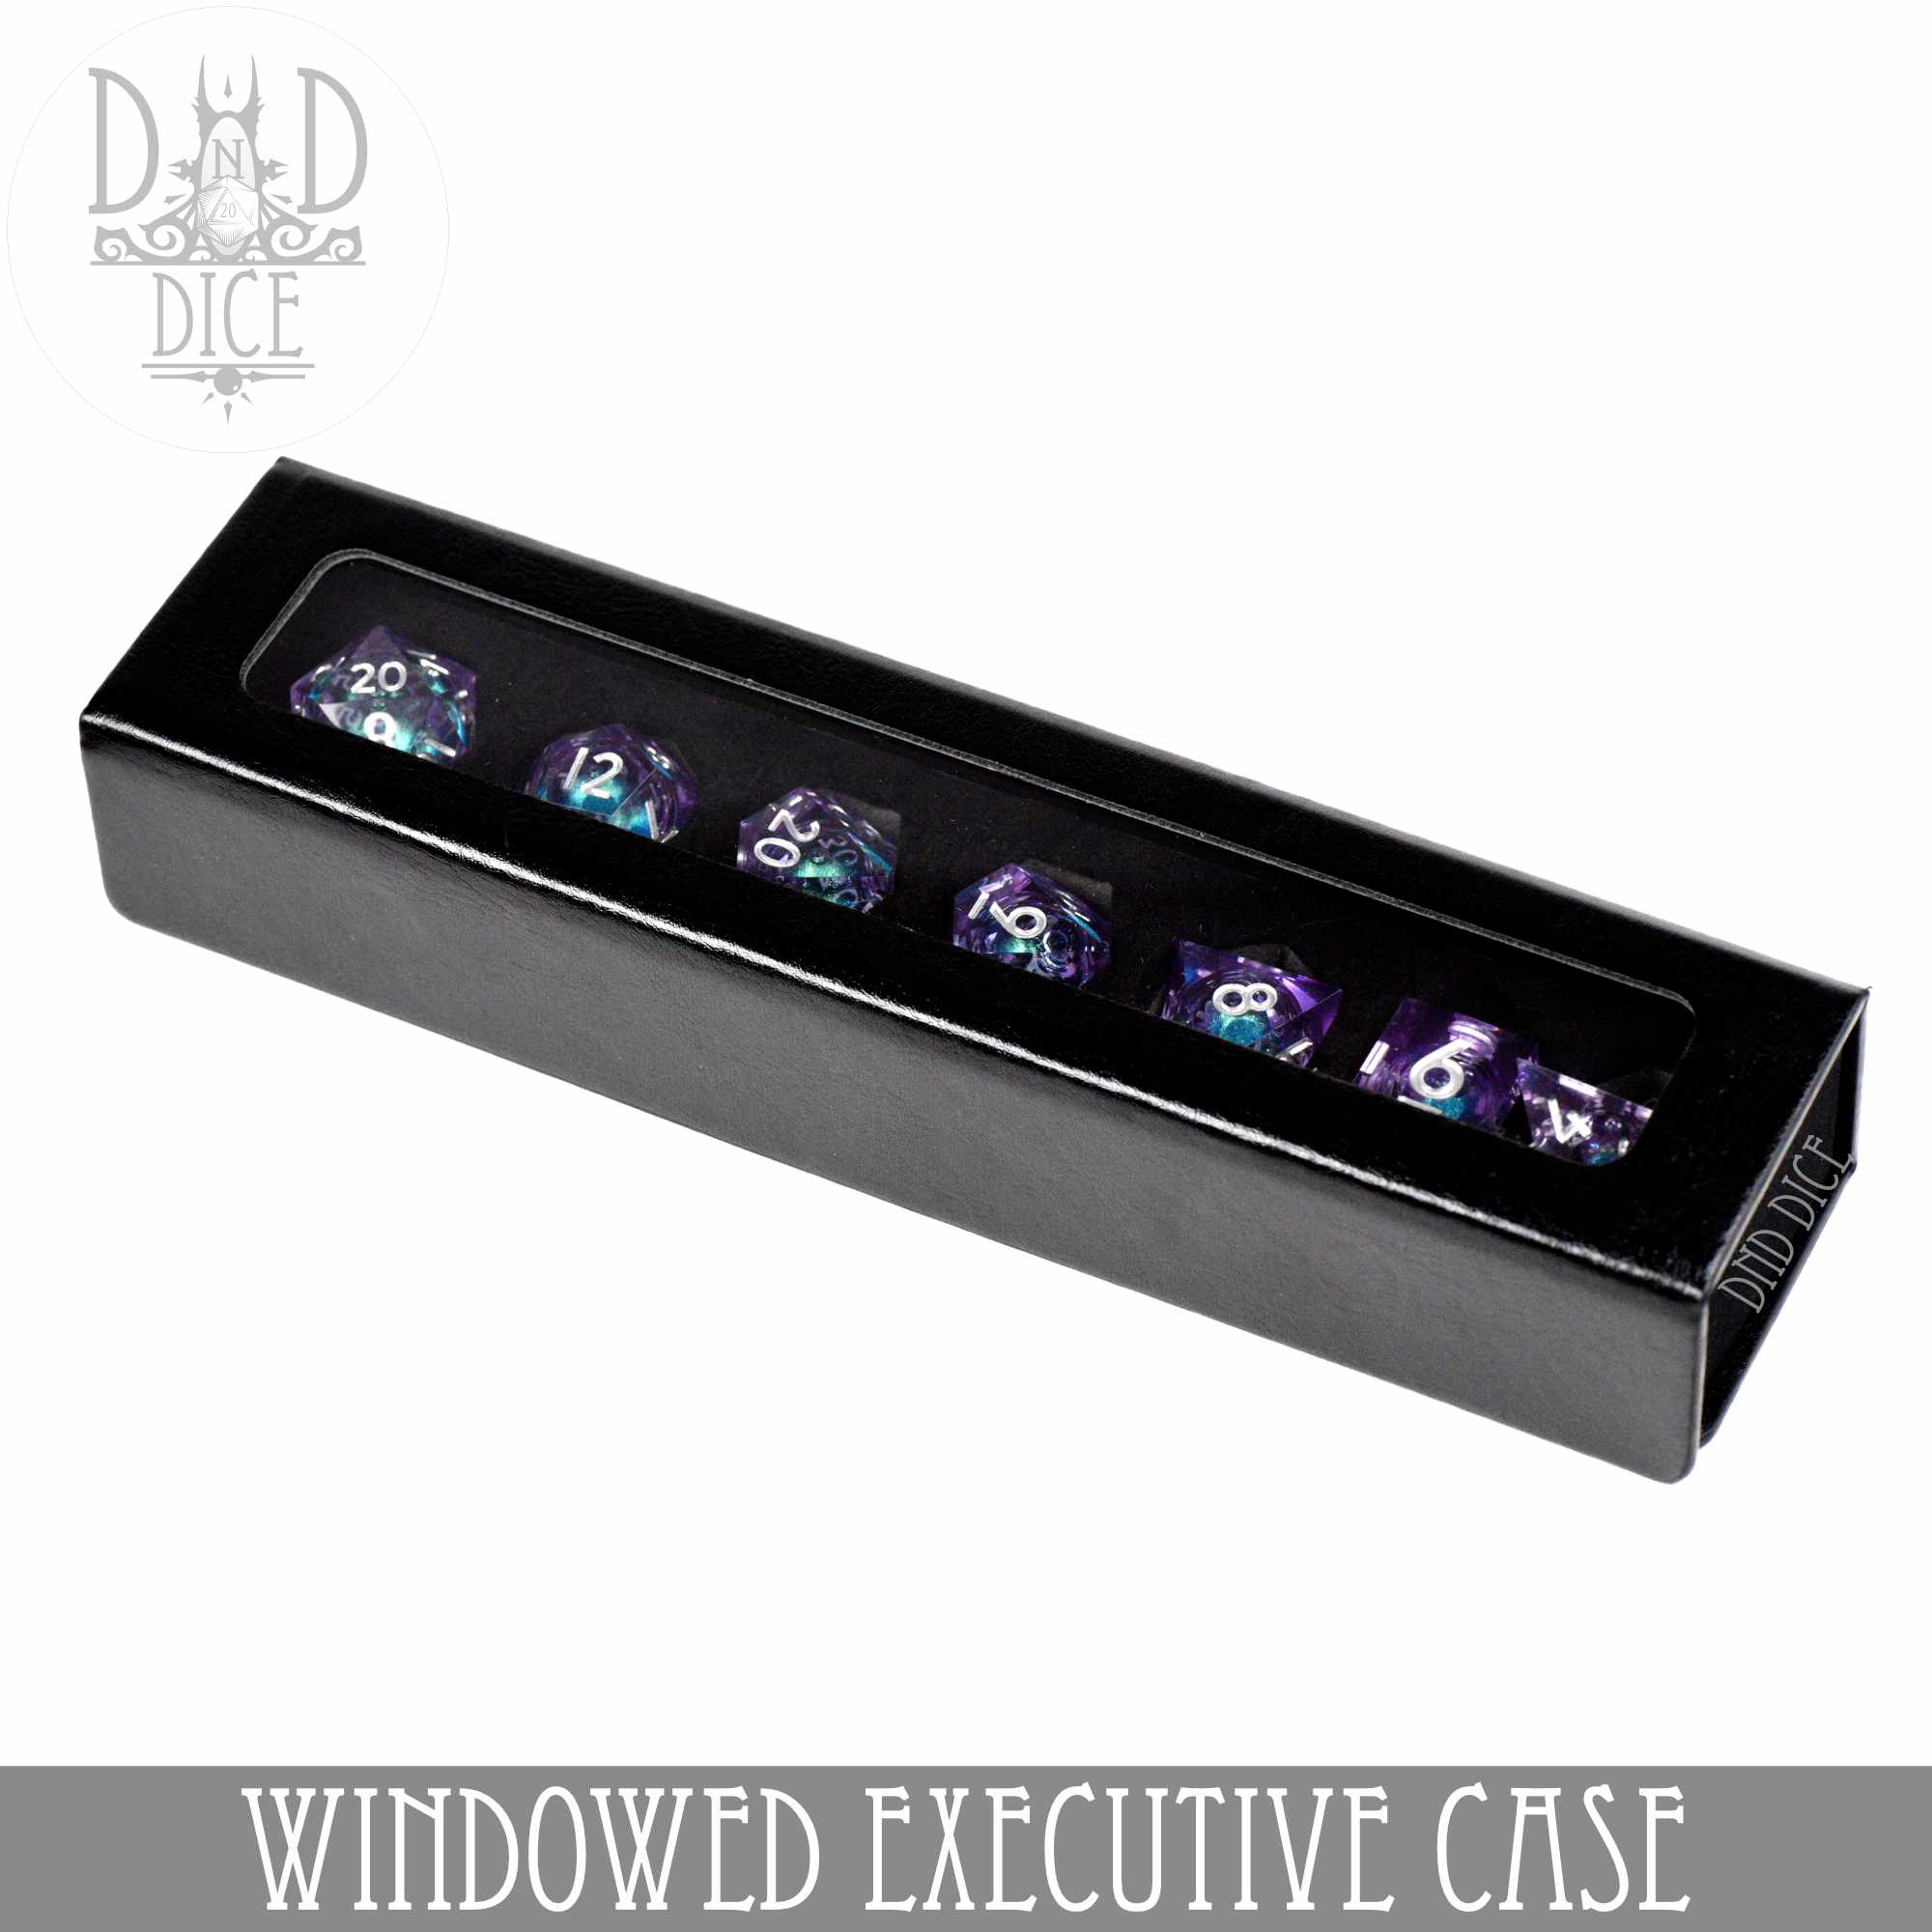 Windowed Executive Case Packaging